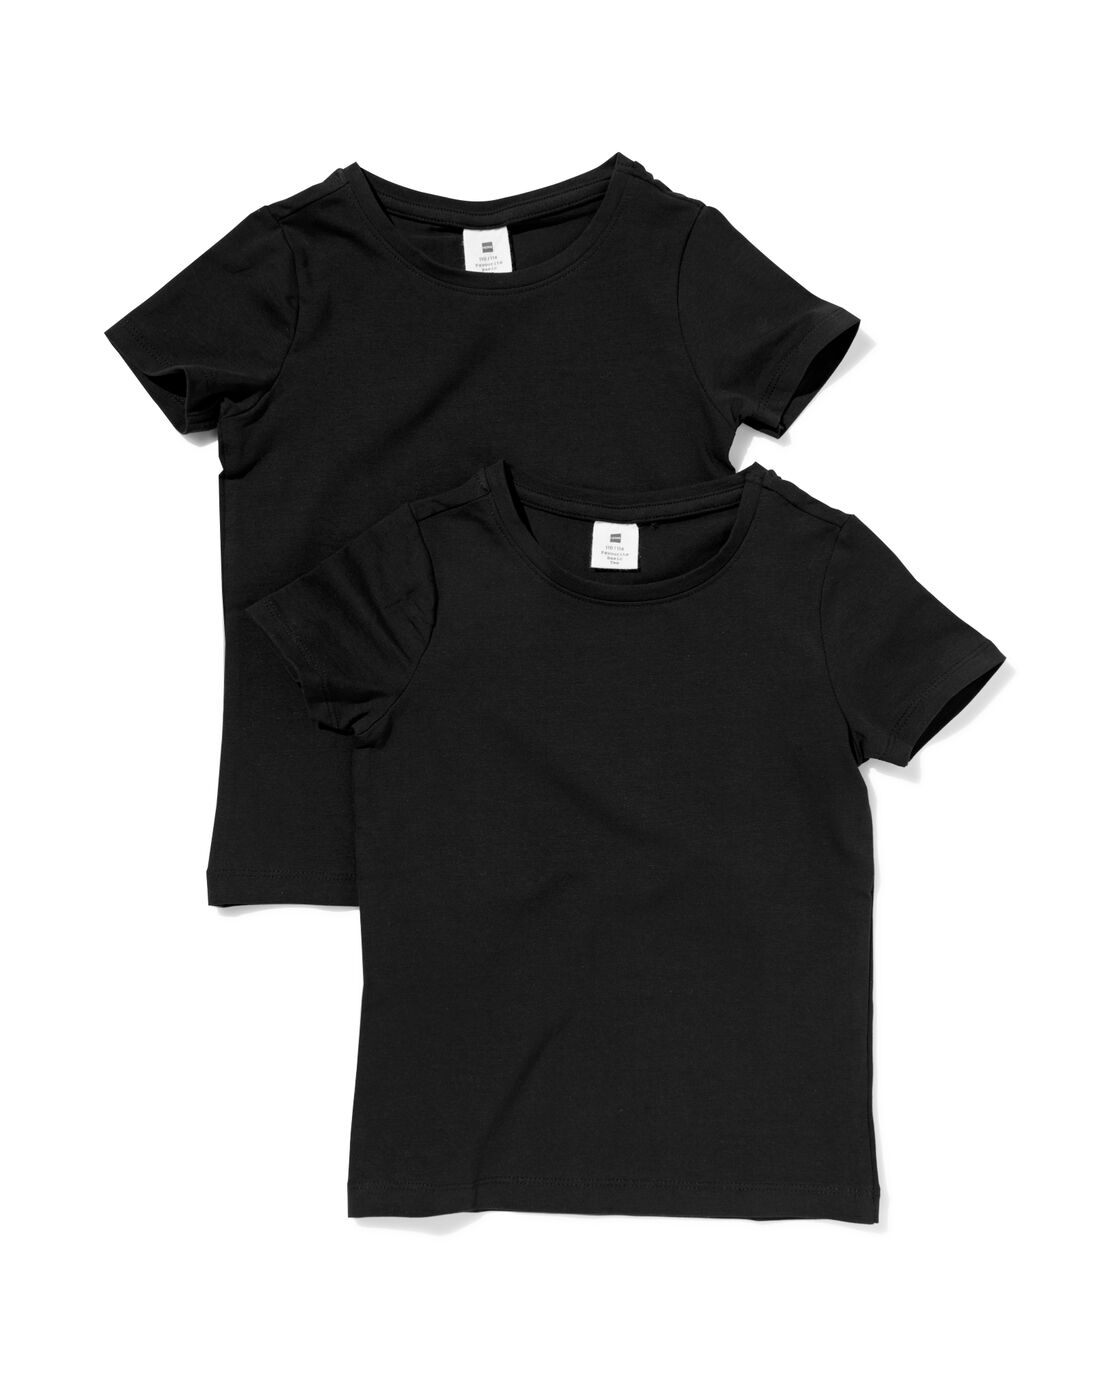 HEMA Kinder T-shirts Biologisch Katoen 2 Stuks Zwart (zwart)